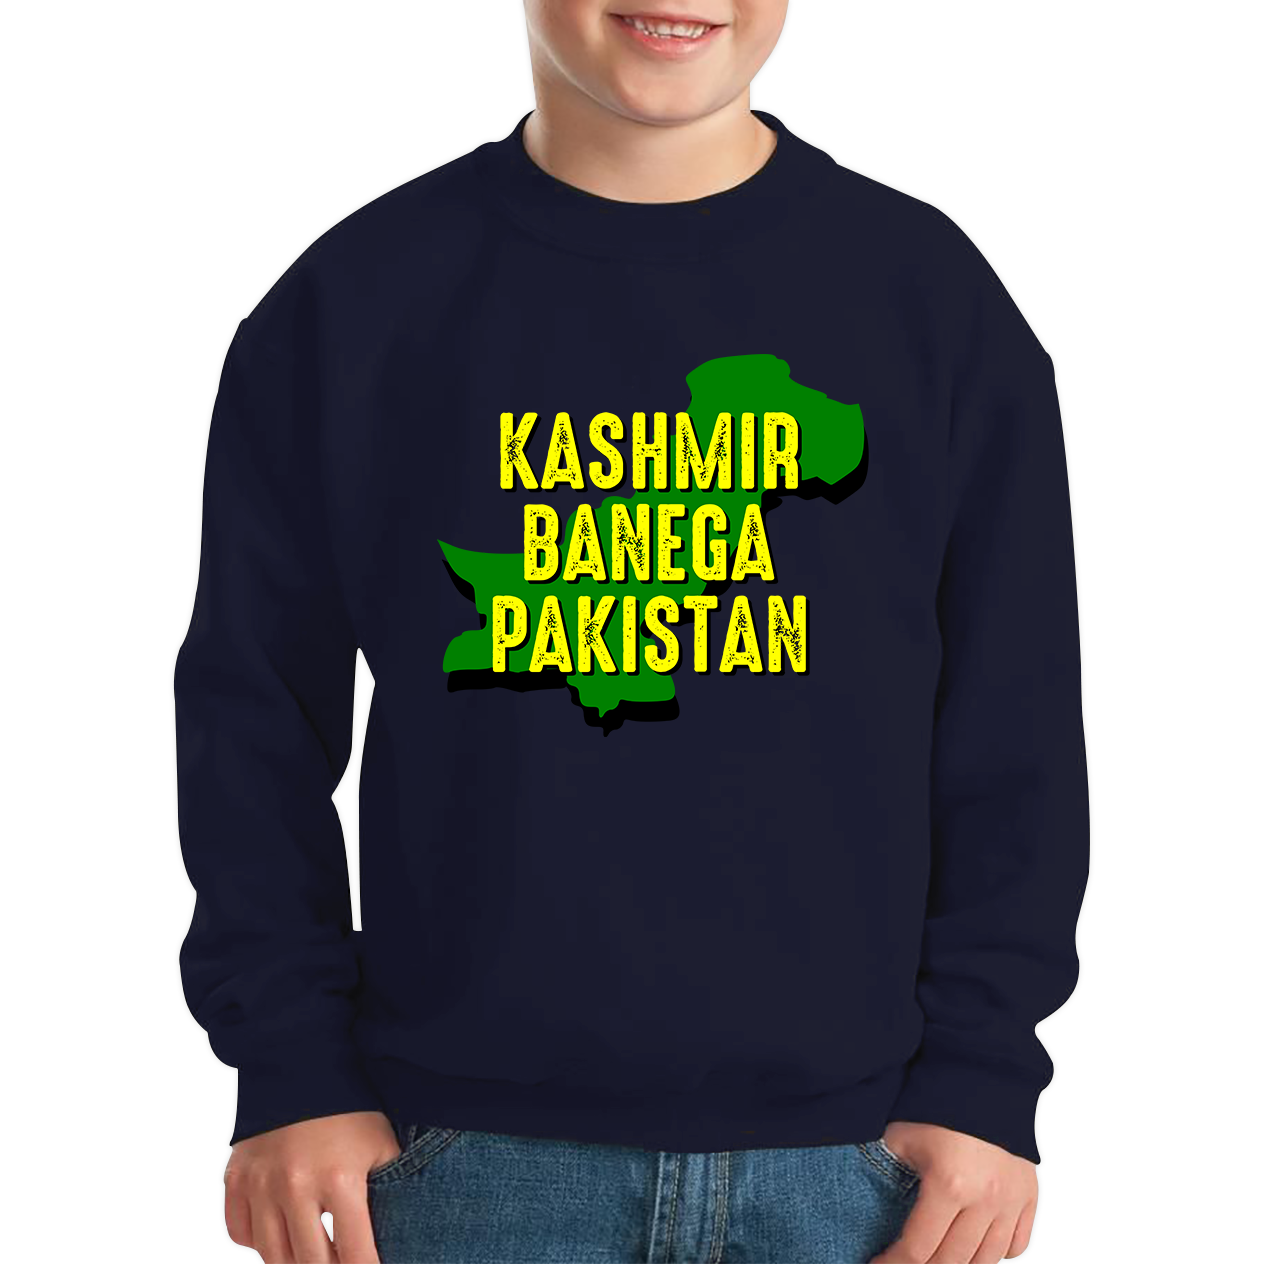 Kashmir Banega Pakistan Stand With Kashmir Pray For Kashmir And Muslims Kids Jumper